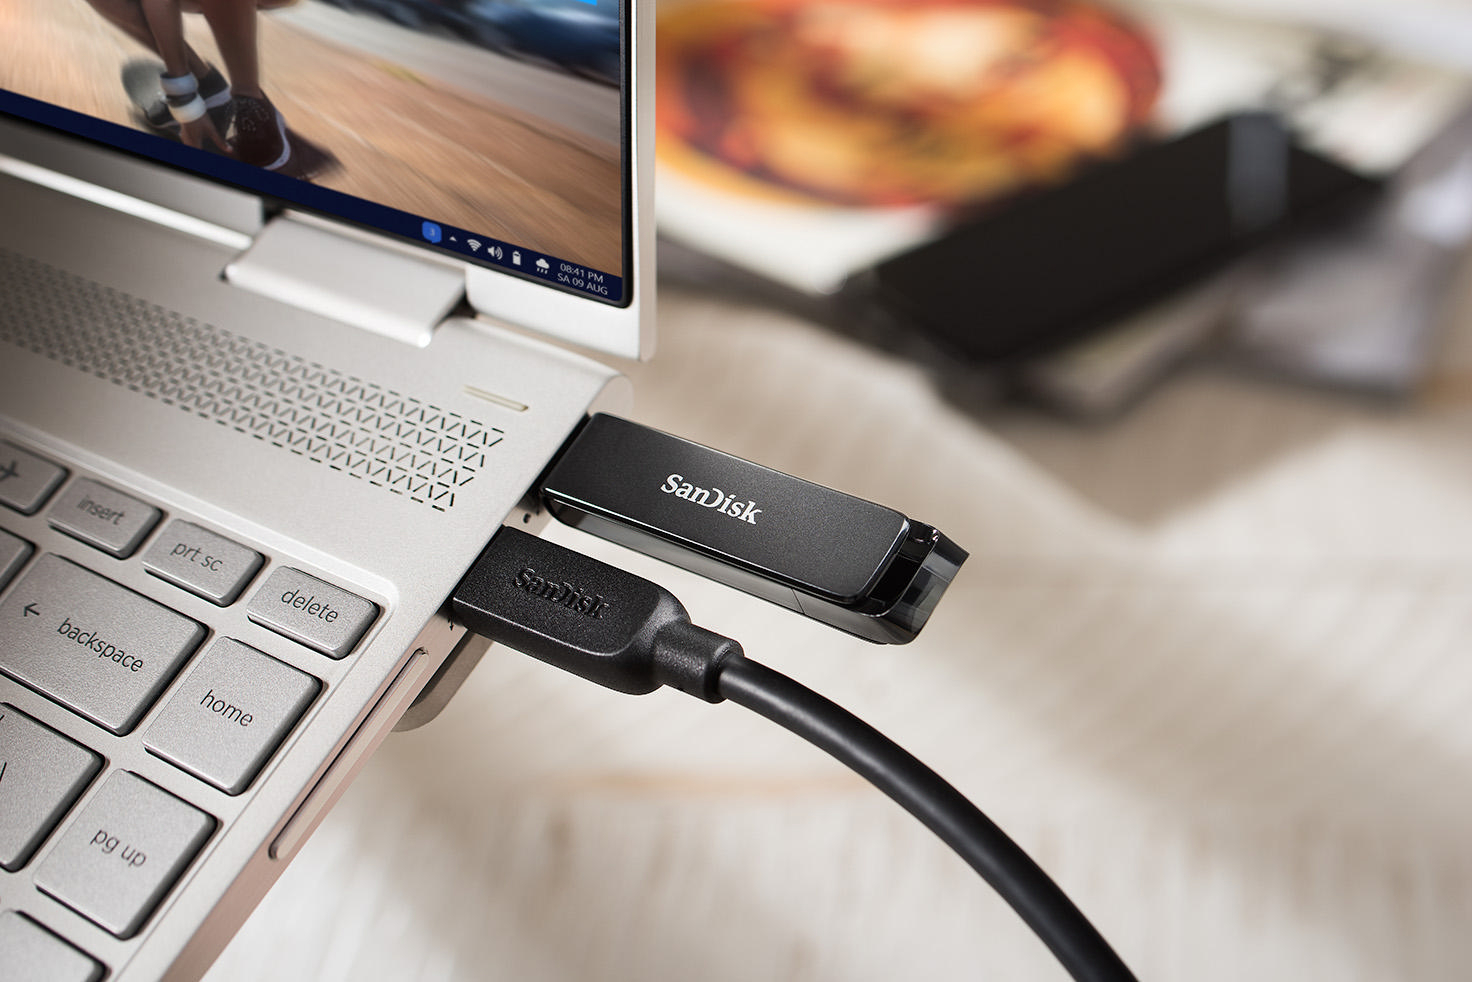 Ultra® 150 GB, USB-Stick, Schwarz MB/s, SANDISK 256